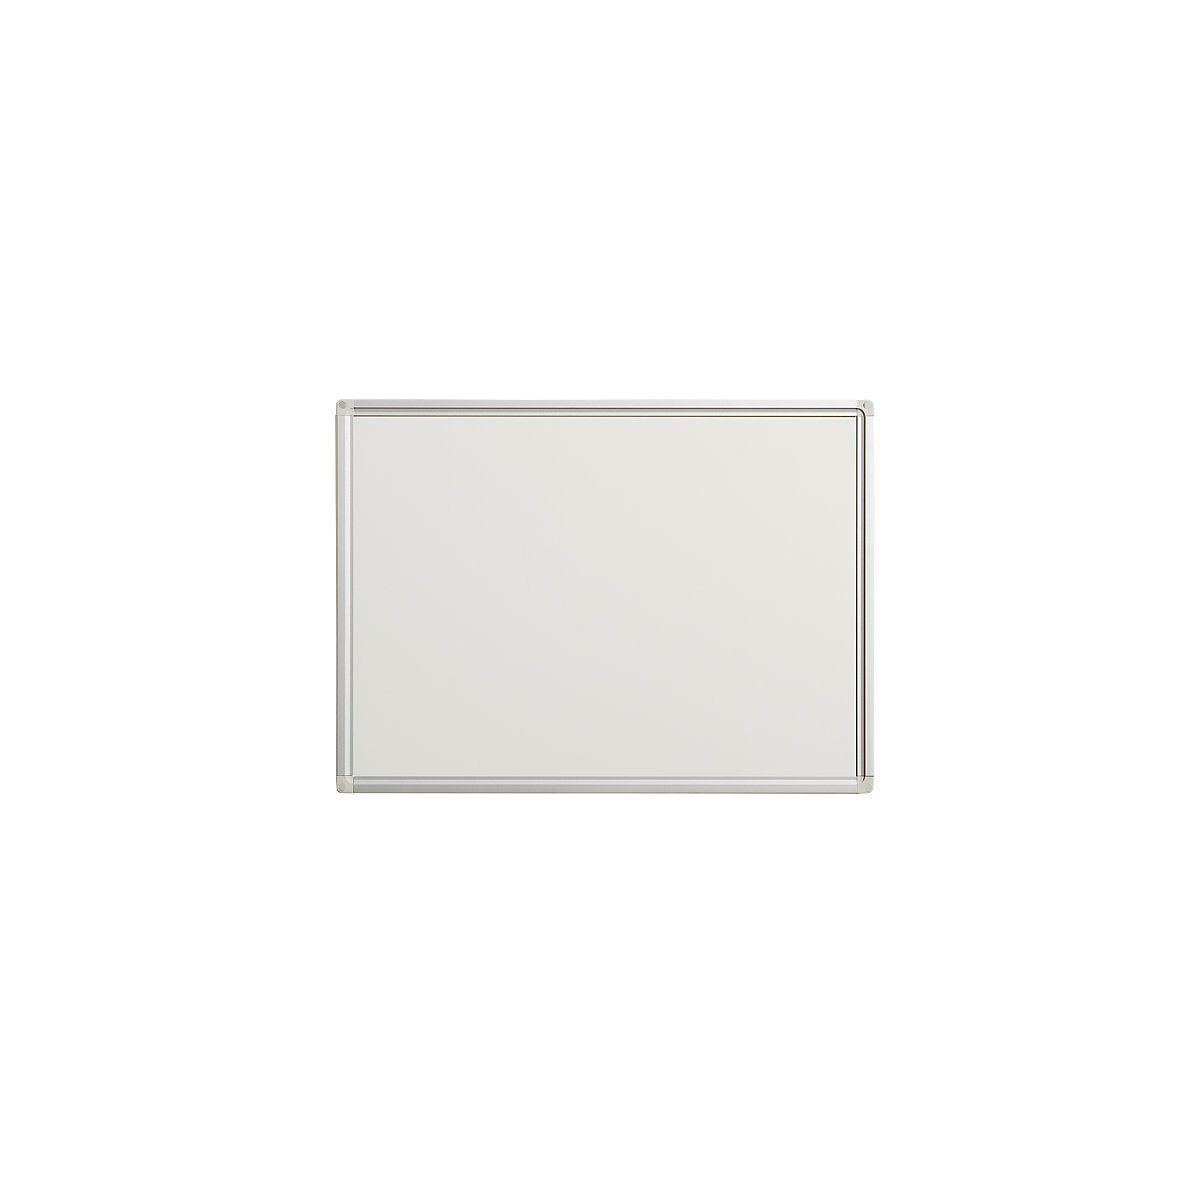 Economy whiteboard – eurokraft pro, sheet steel, painted, WxH 600 x 450 mm-13